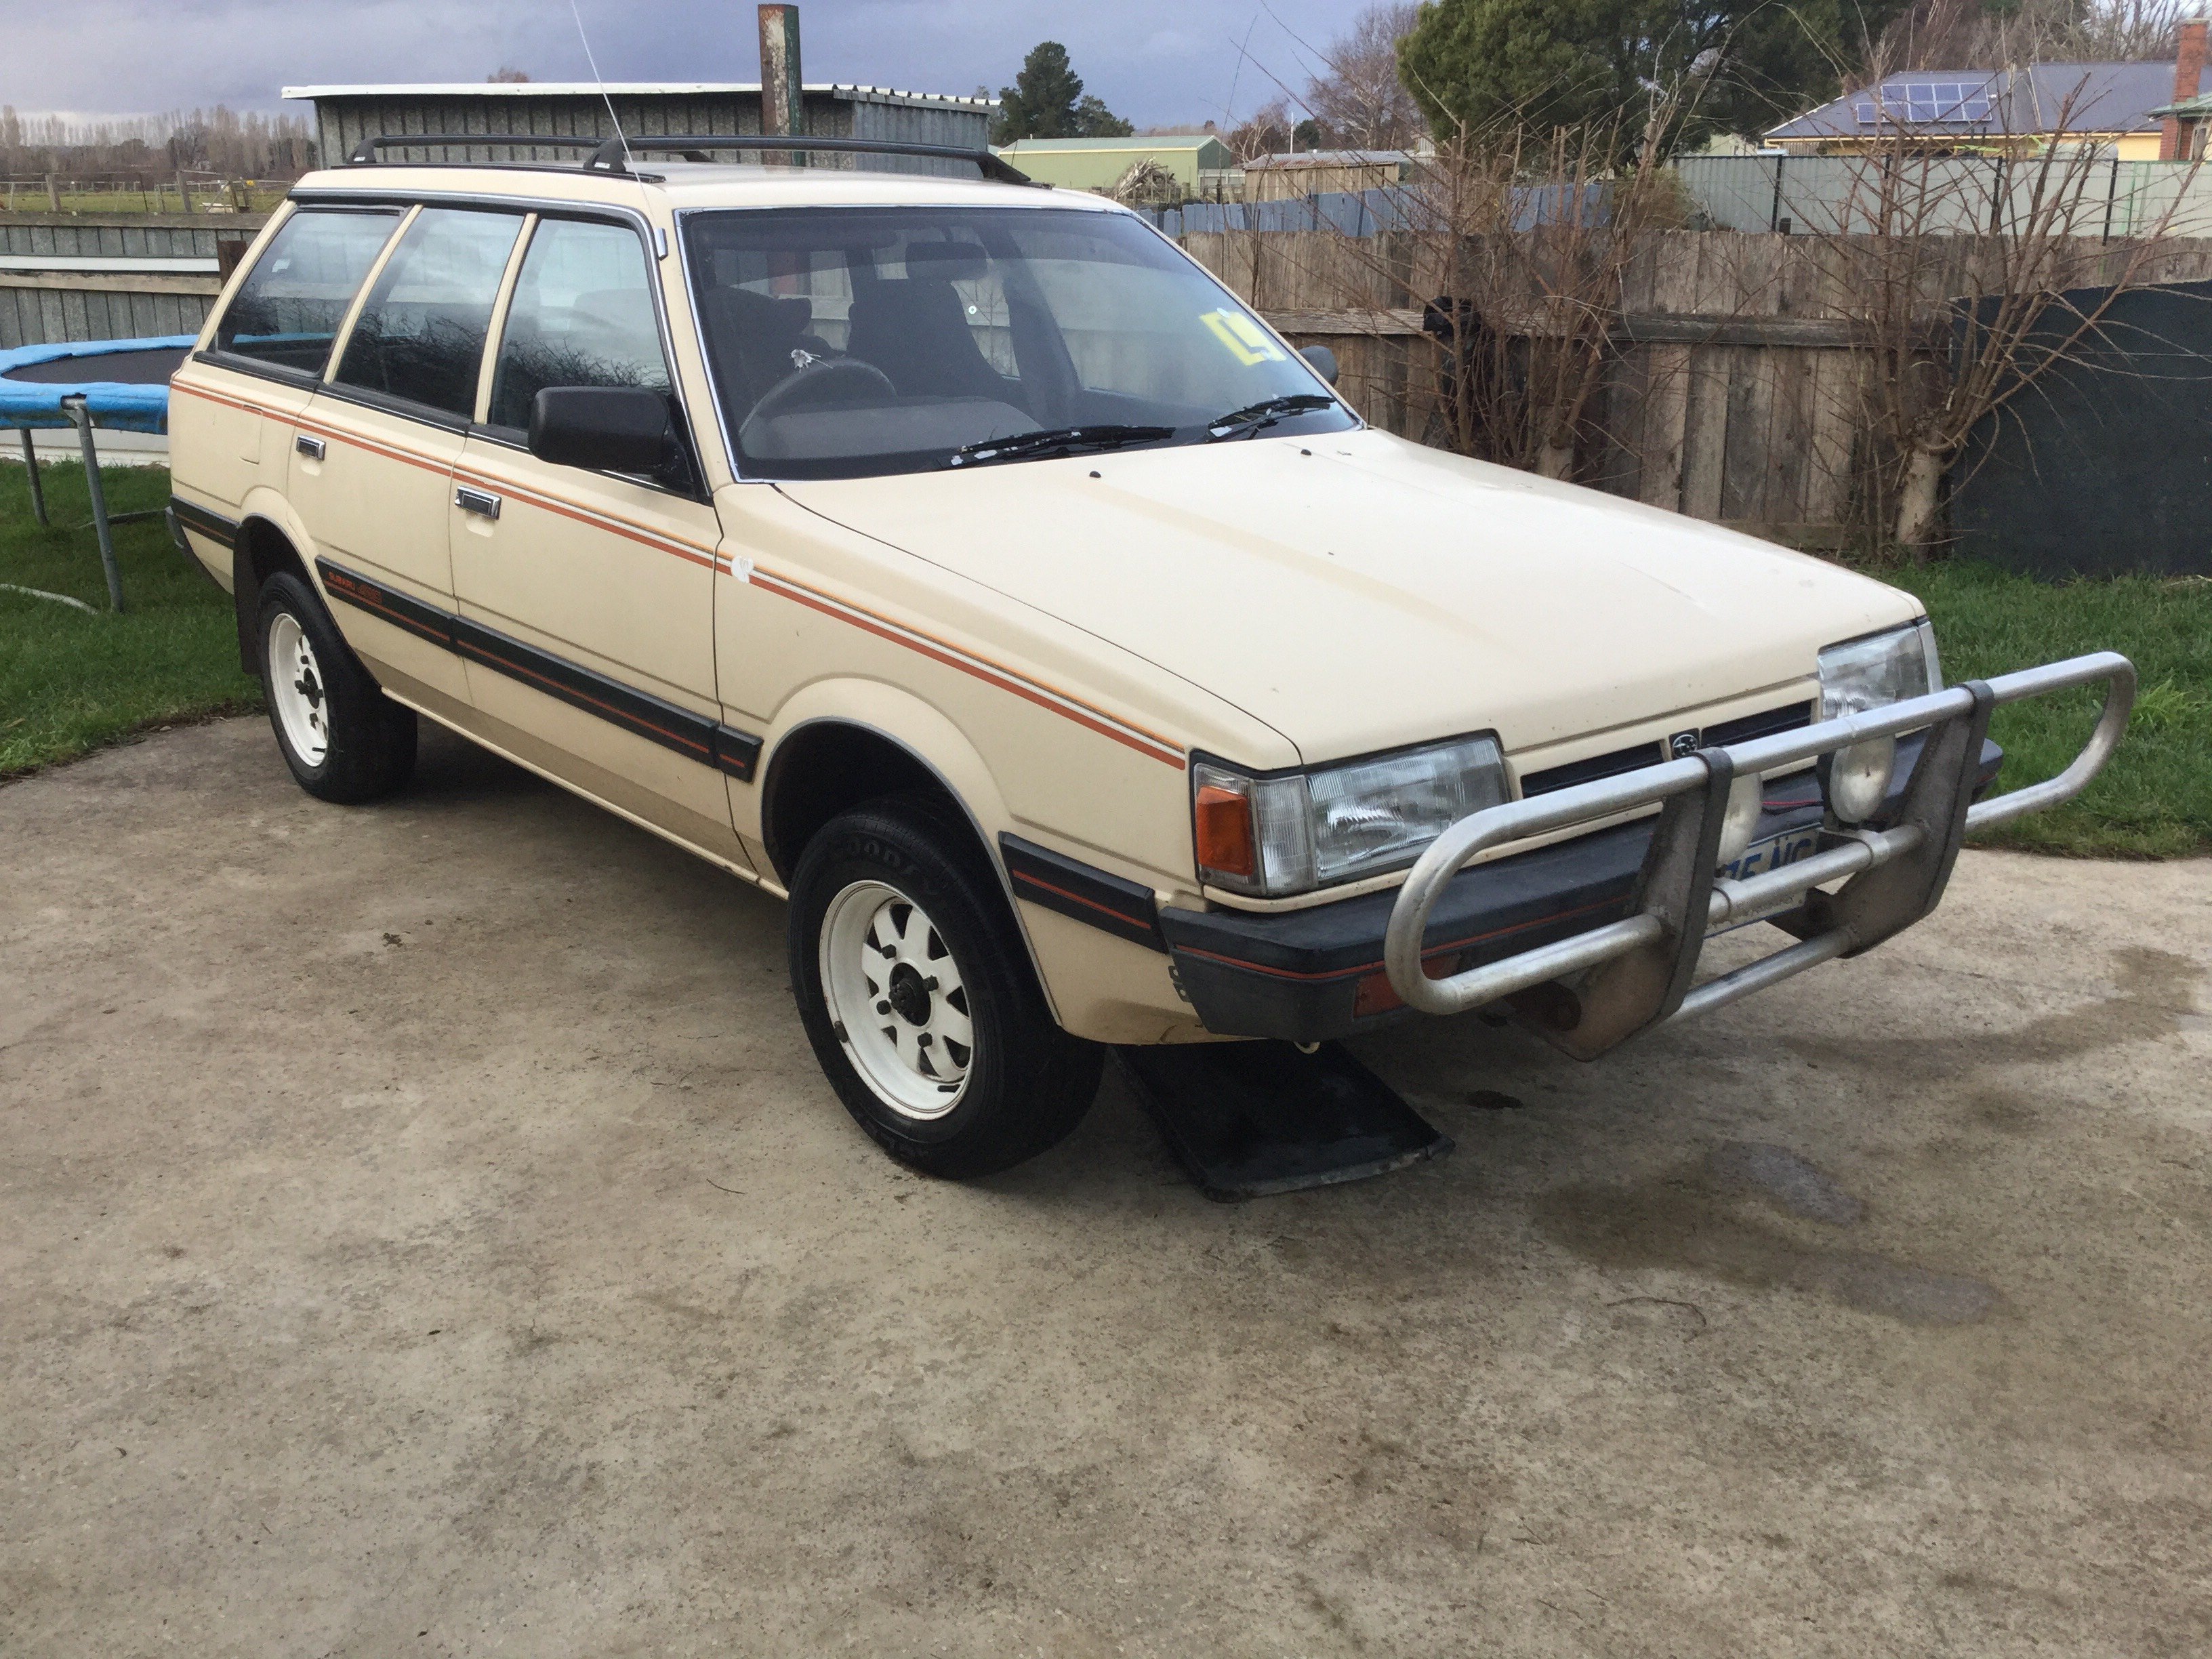 4 вд универсал. Субару Леоне универсал 1988. Subaru Leone 1988. Субару Леоне 1987 универсал.